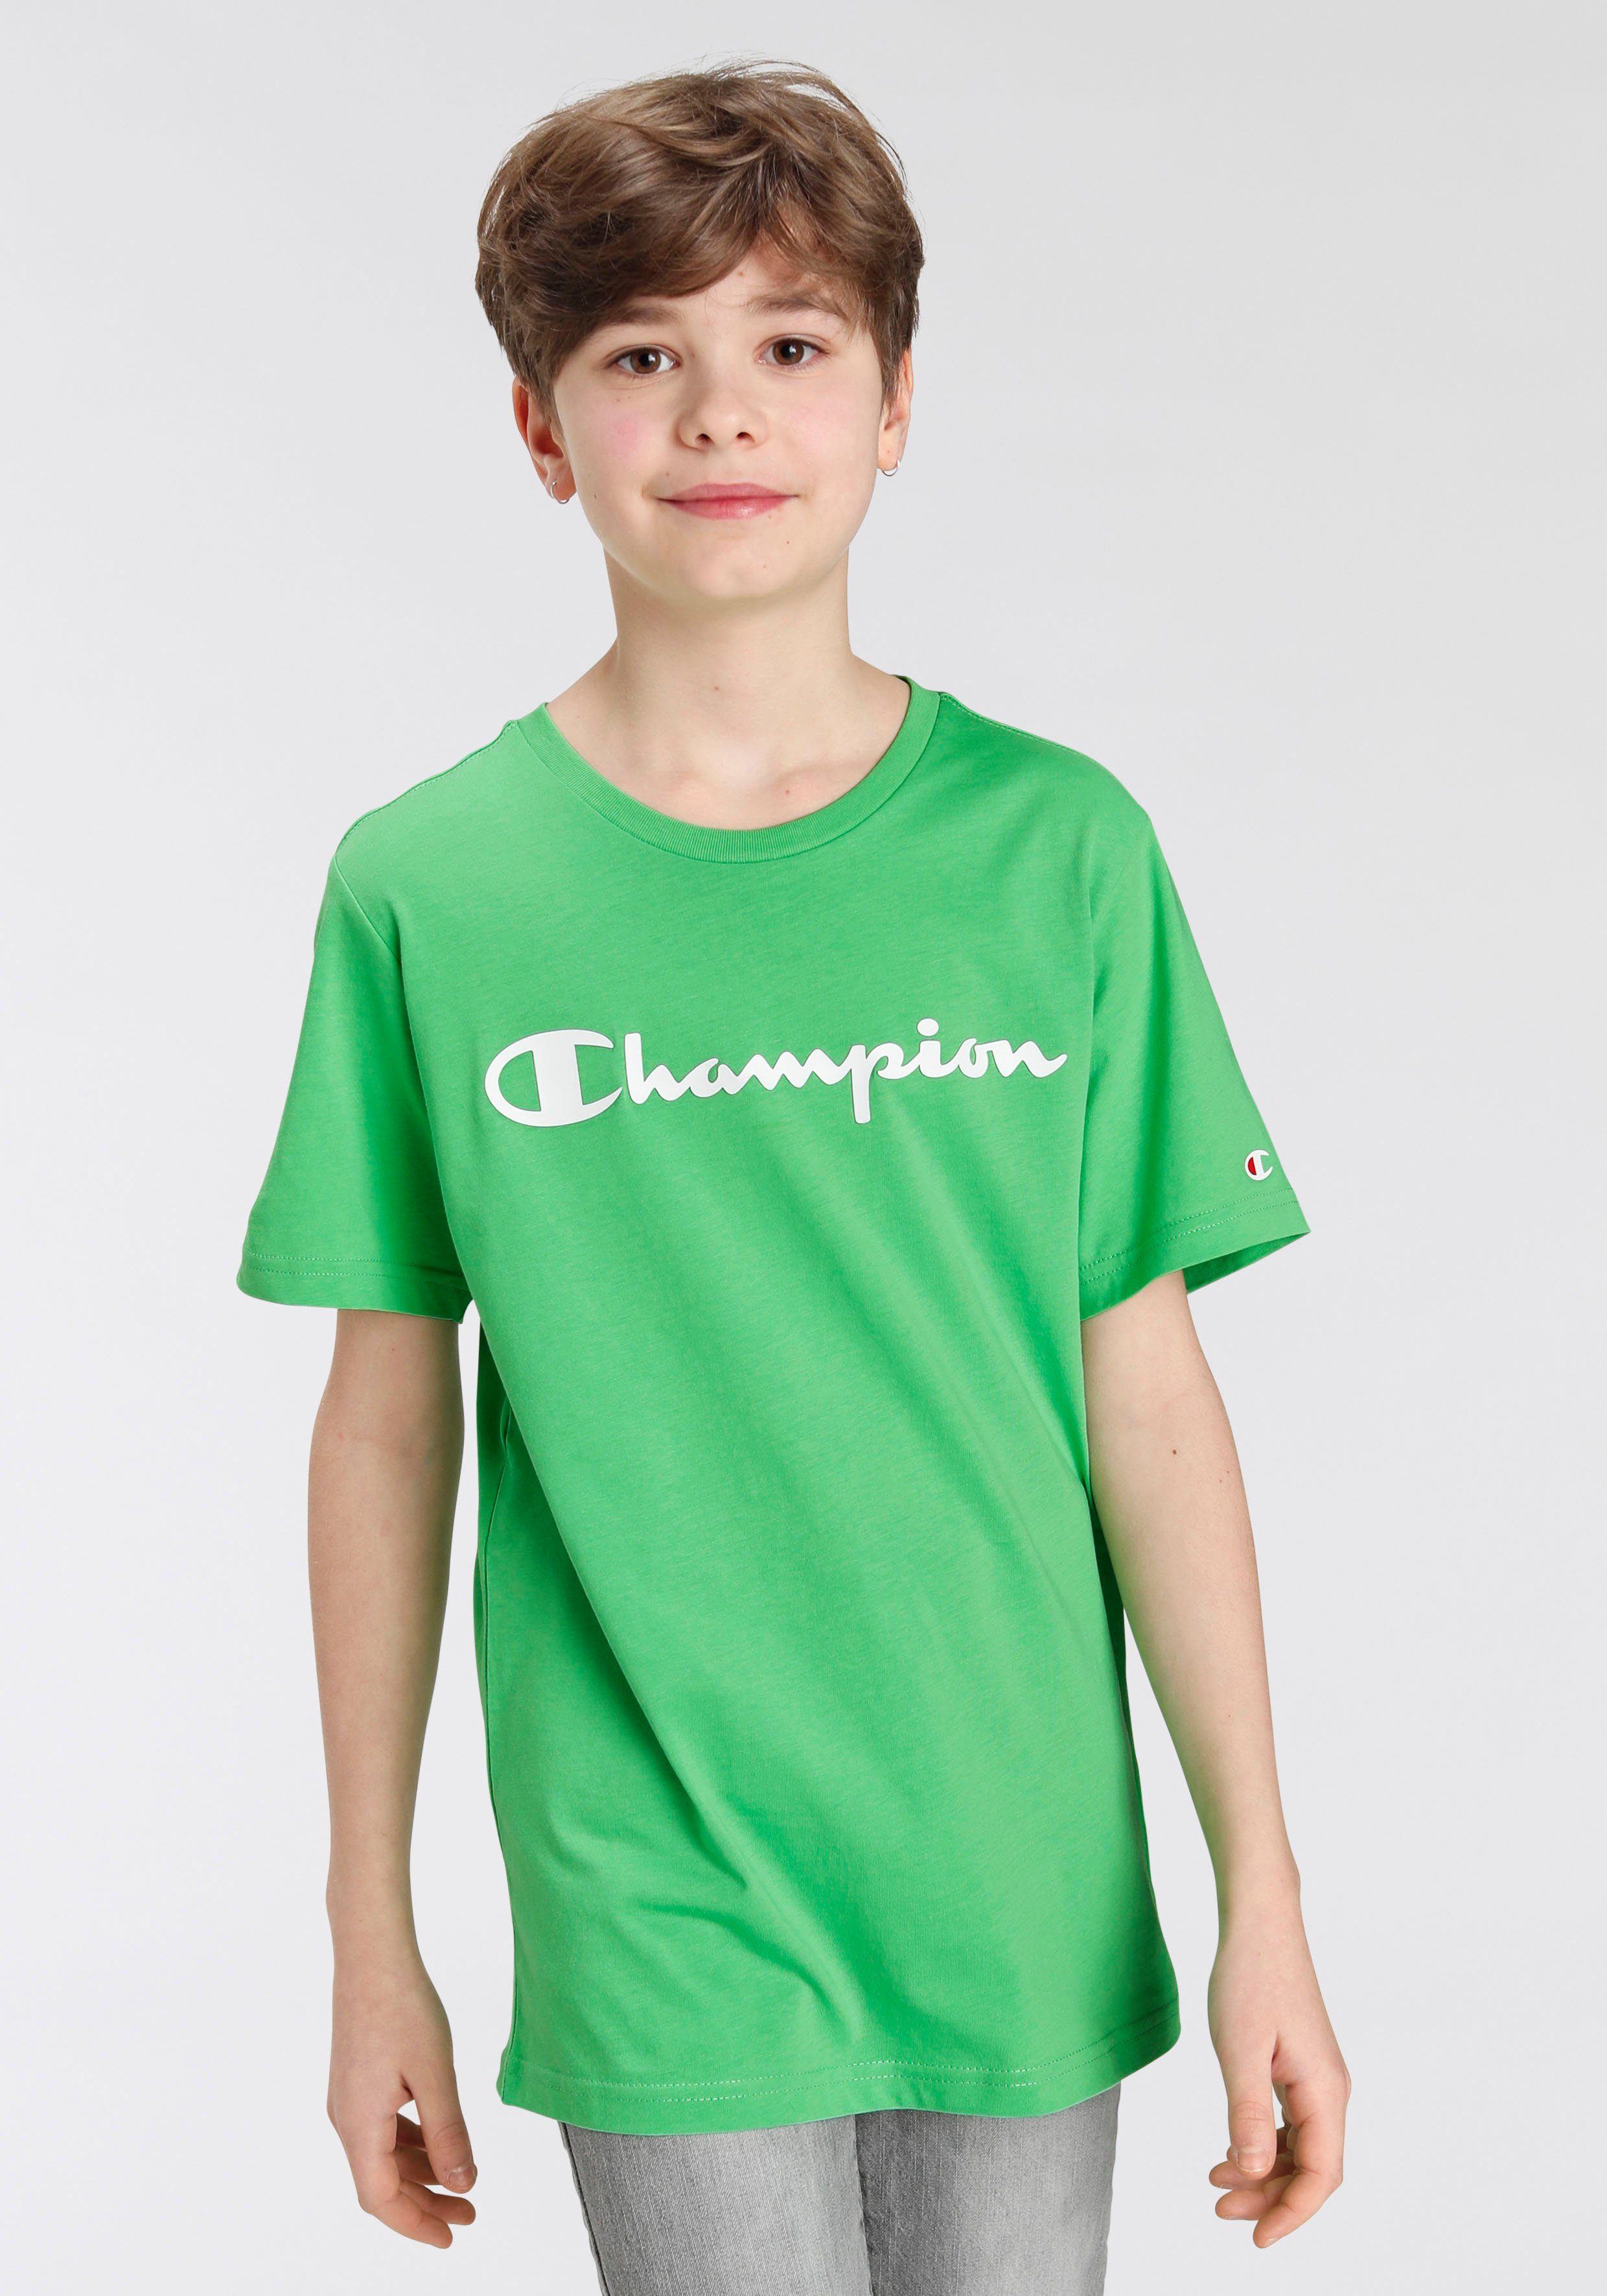 [Sonderverkaufsartikel] Champion T-Shirt Crewneck grün T-Shirt